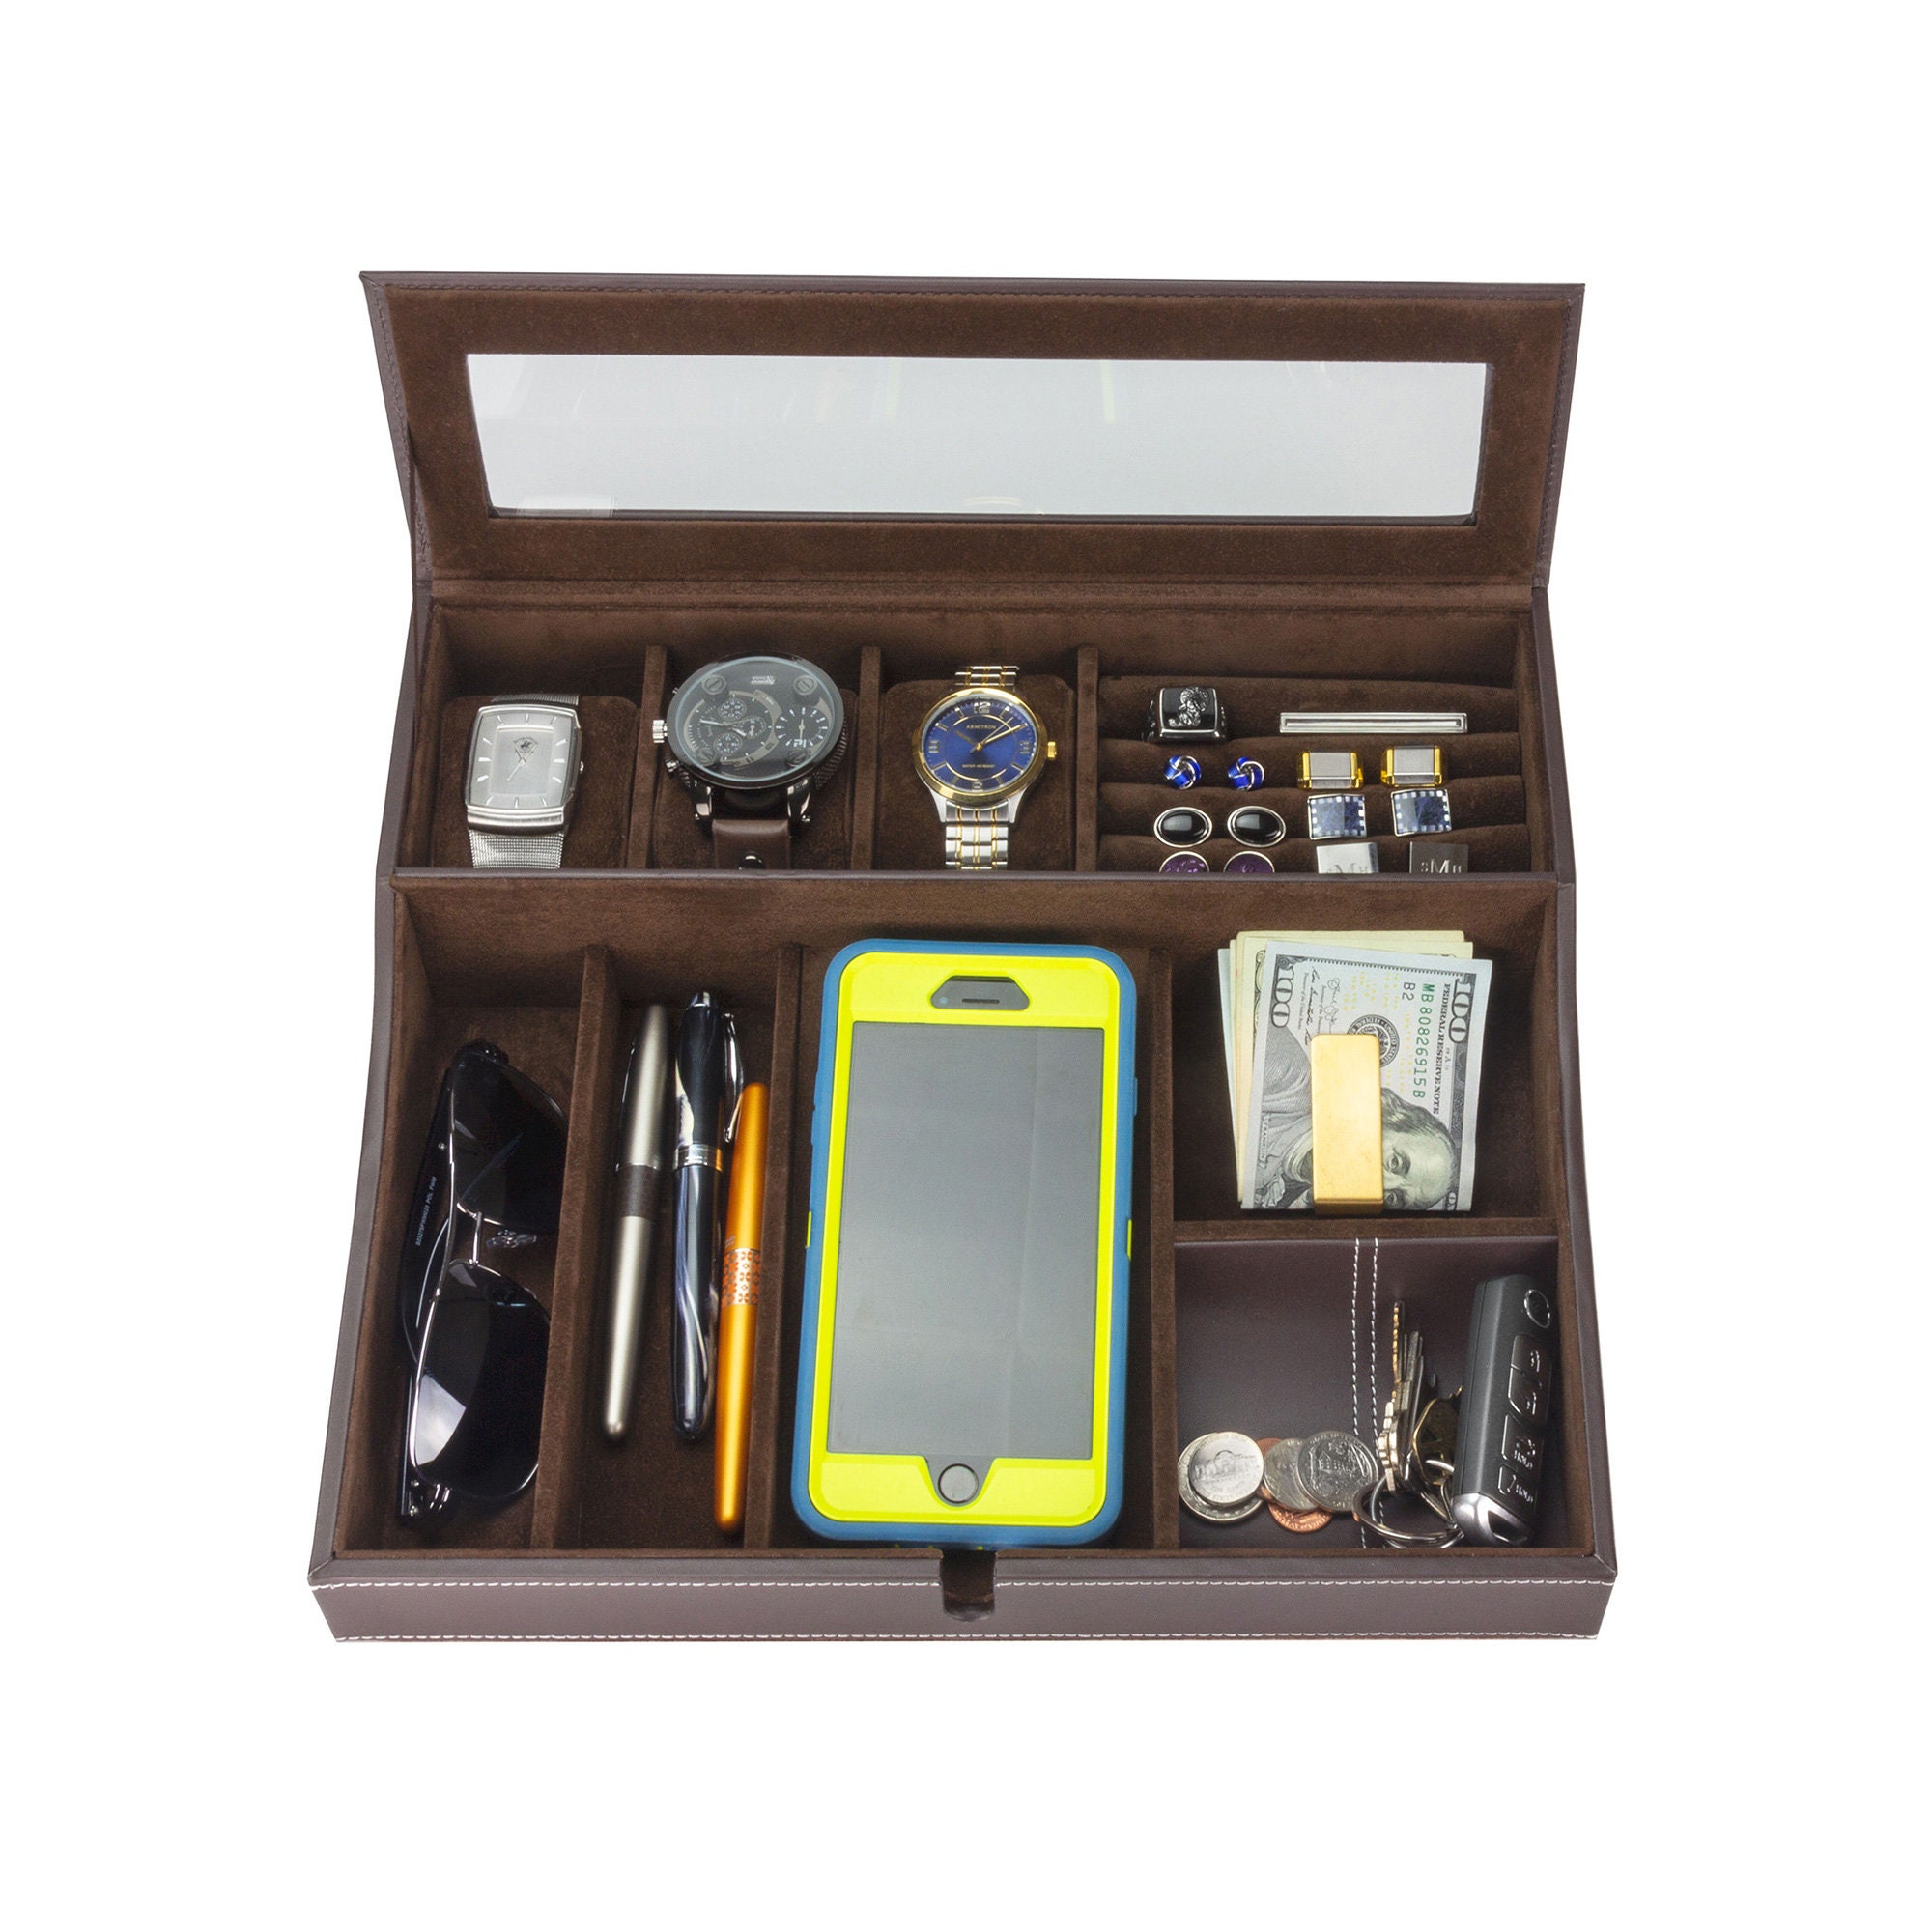 Admiral - Big Dresser Valet Box Organizer with Large Smartphone